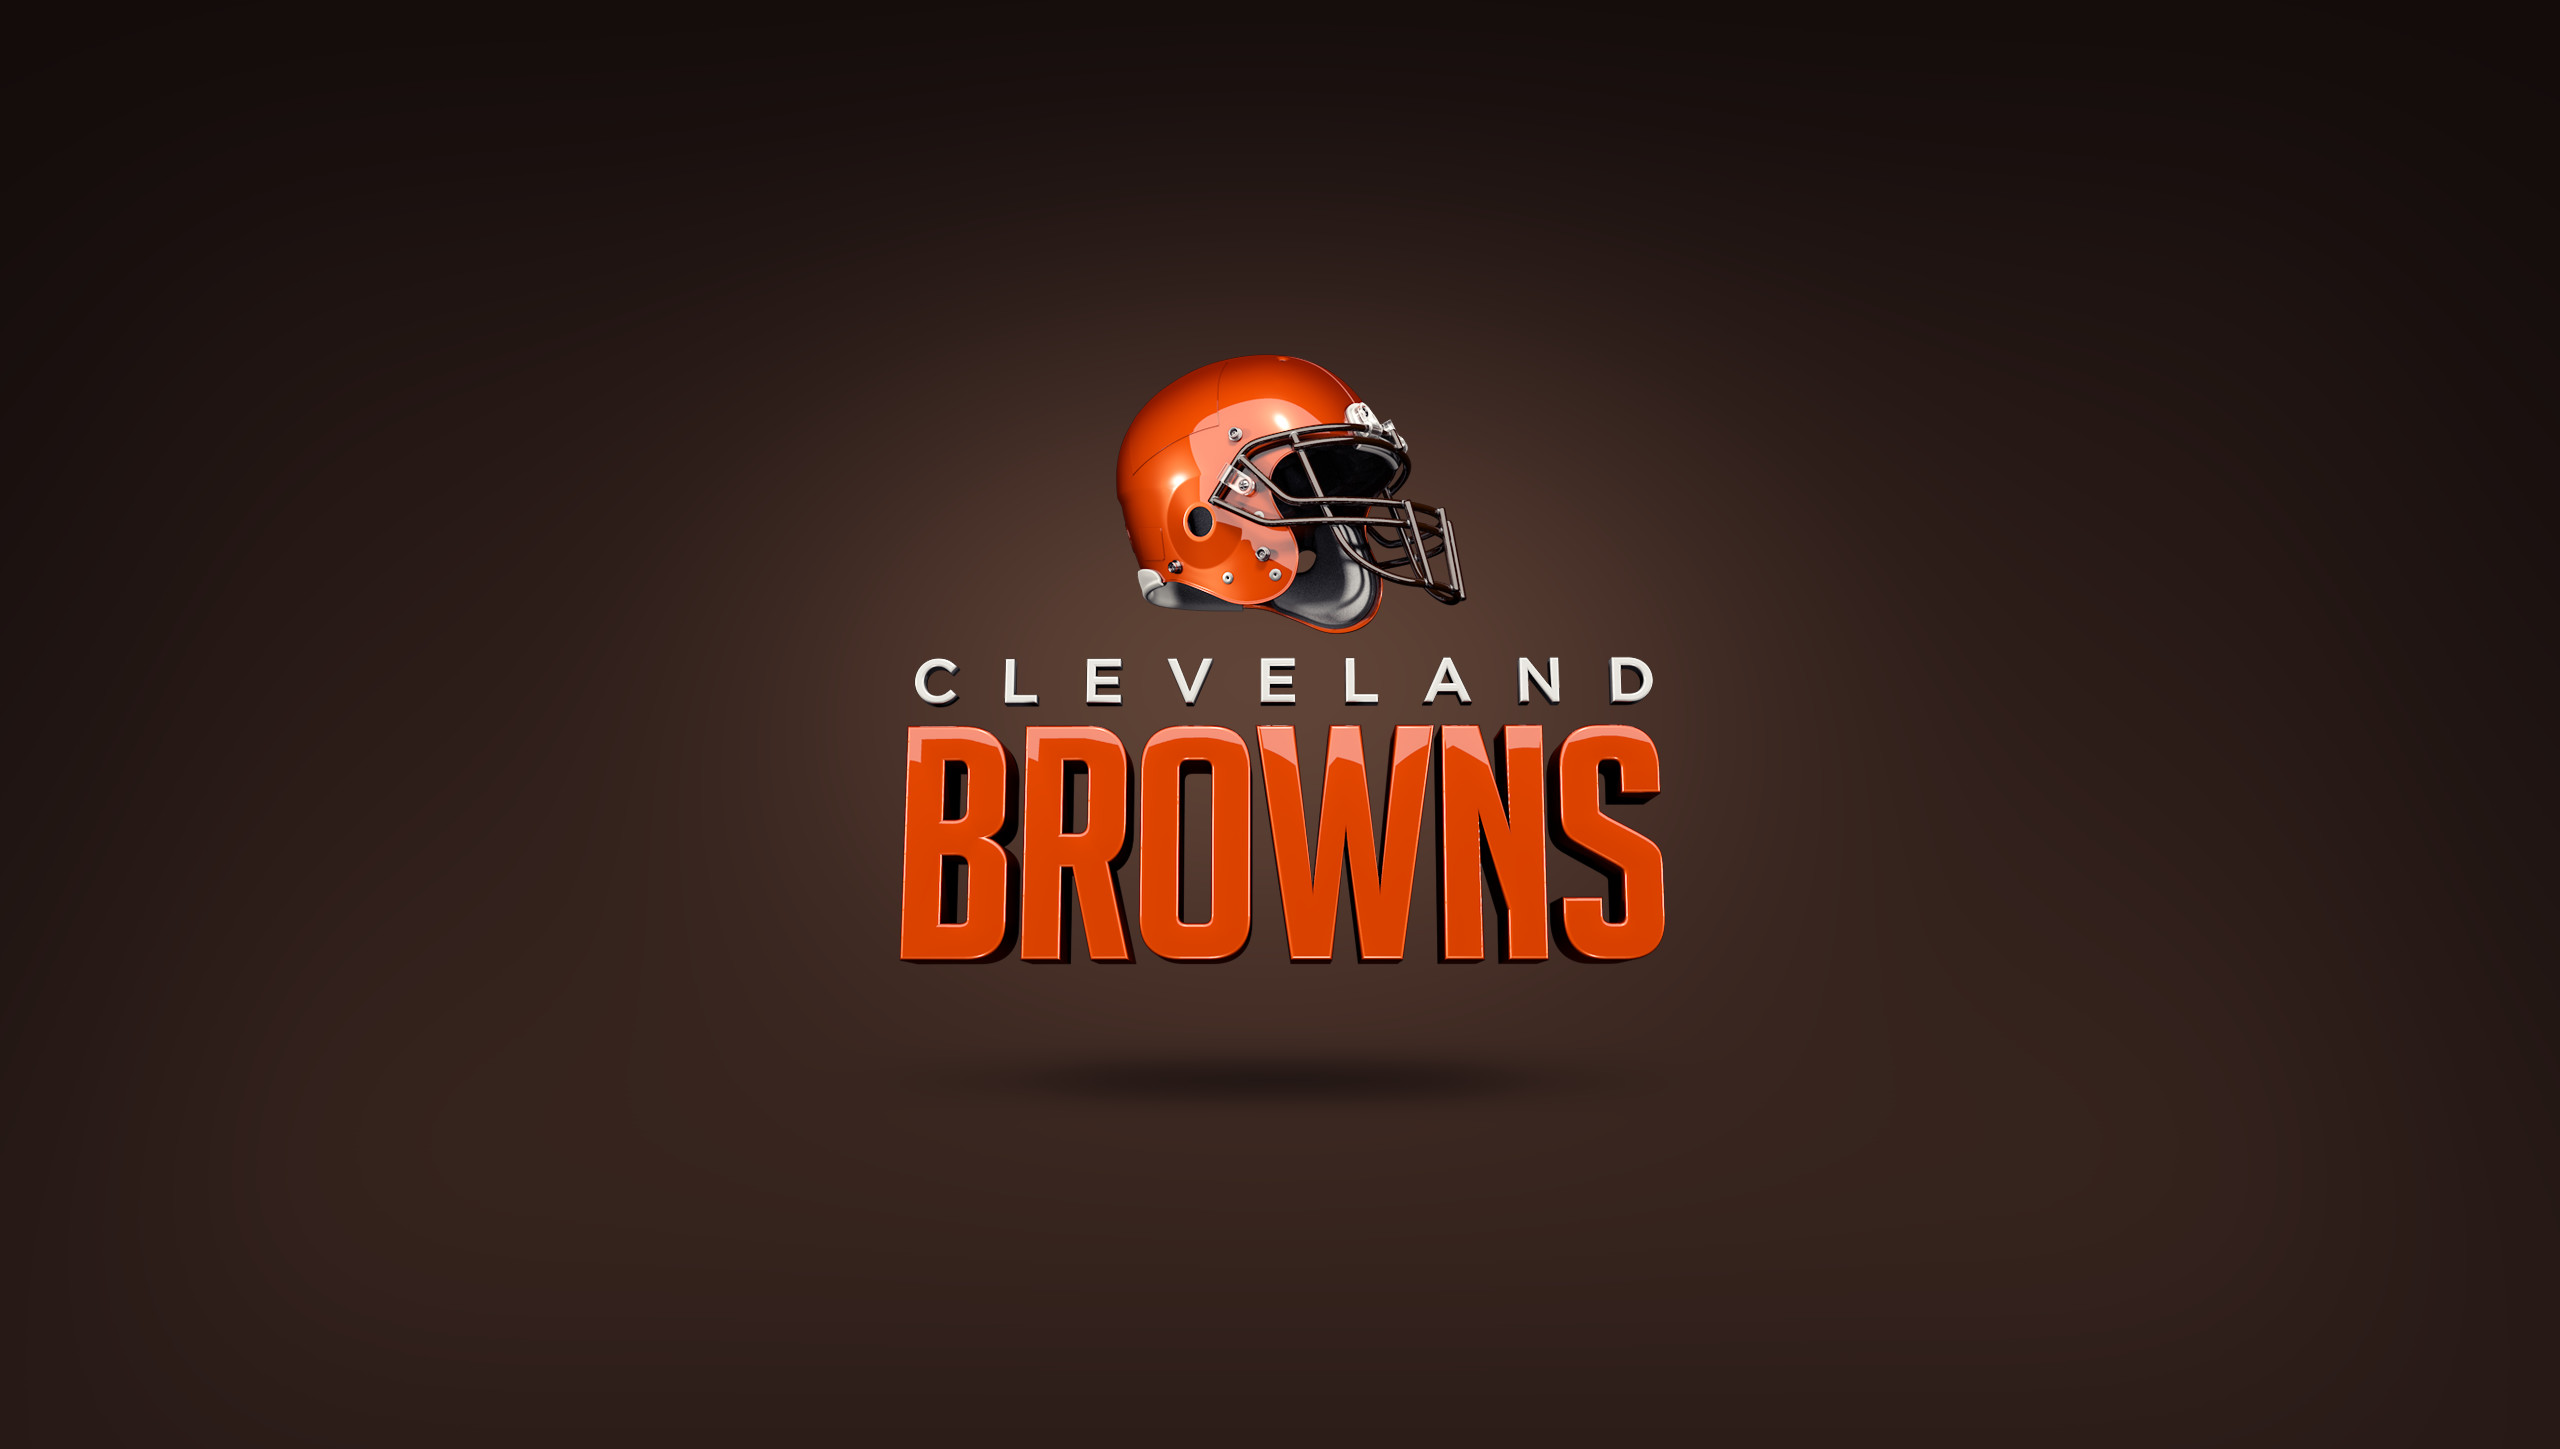 Browns Downloads  Cleveland Browns  clevelandbrownscom